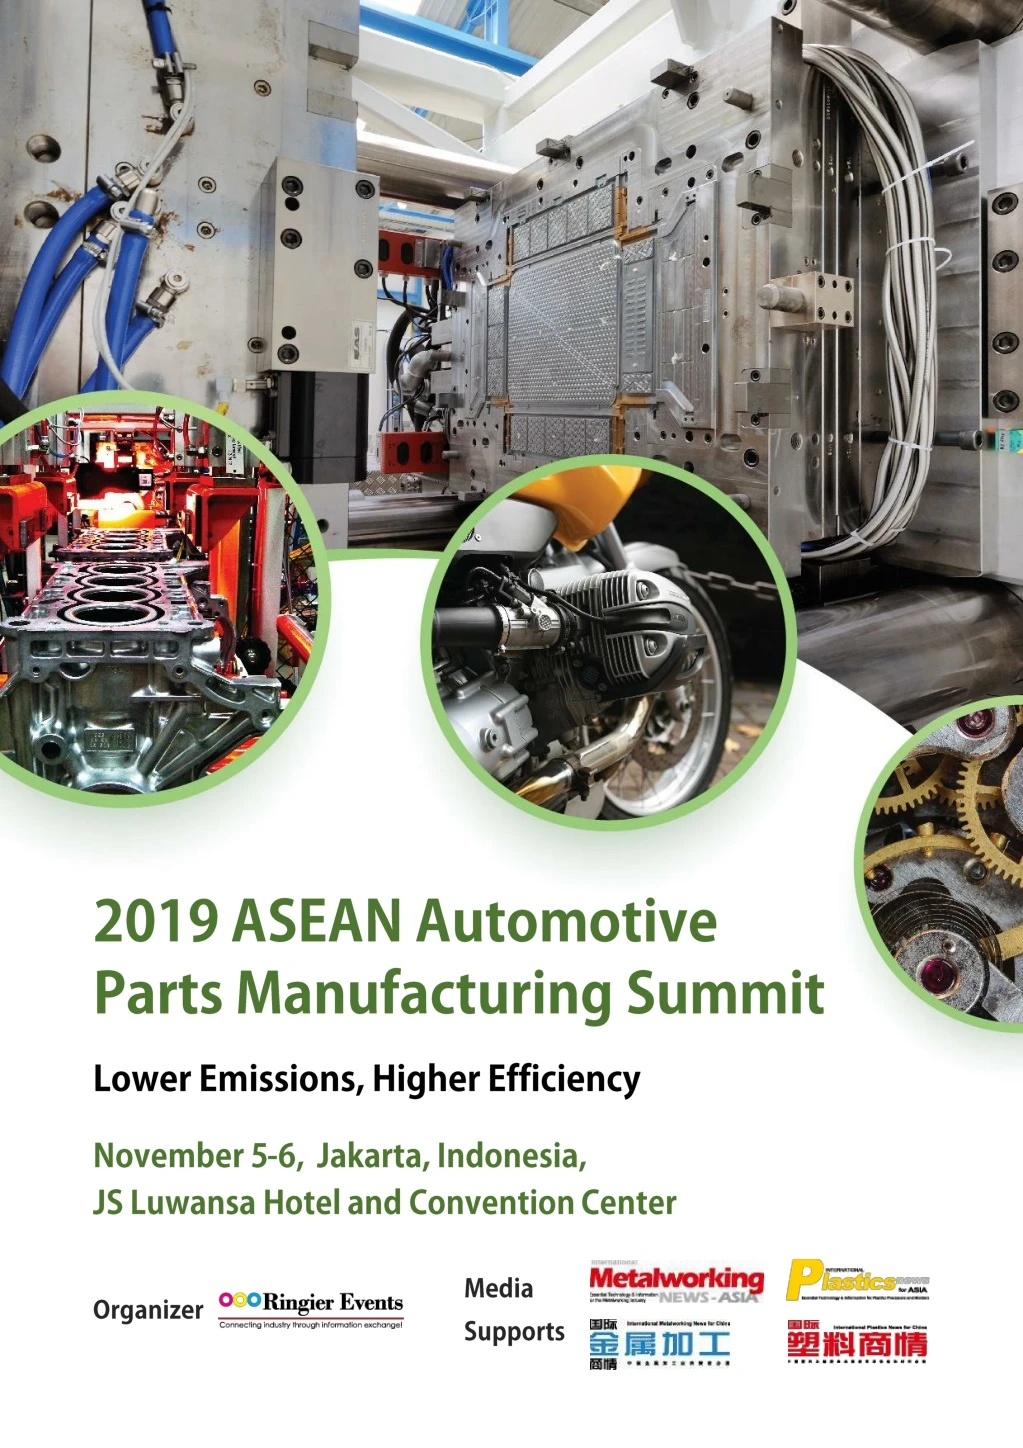 2019 asean automotive parts manufacturing summit